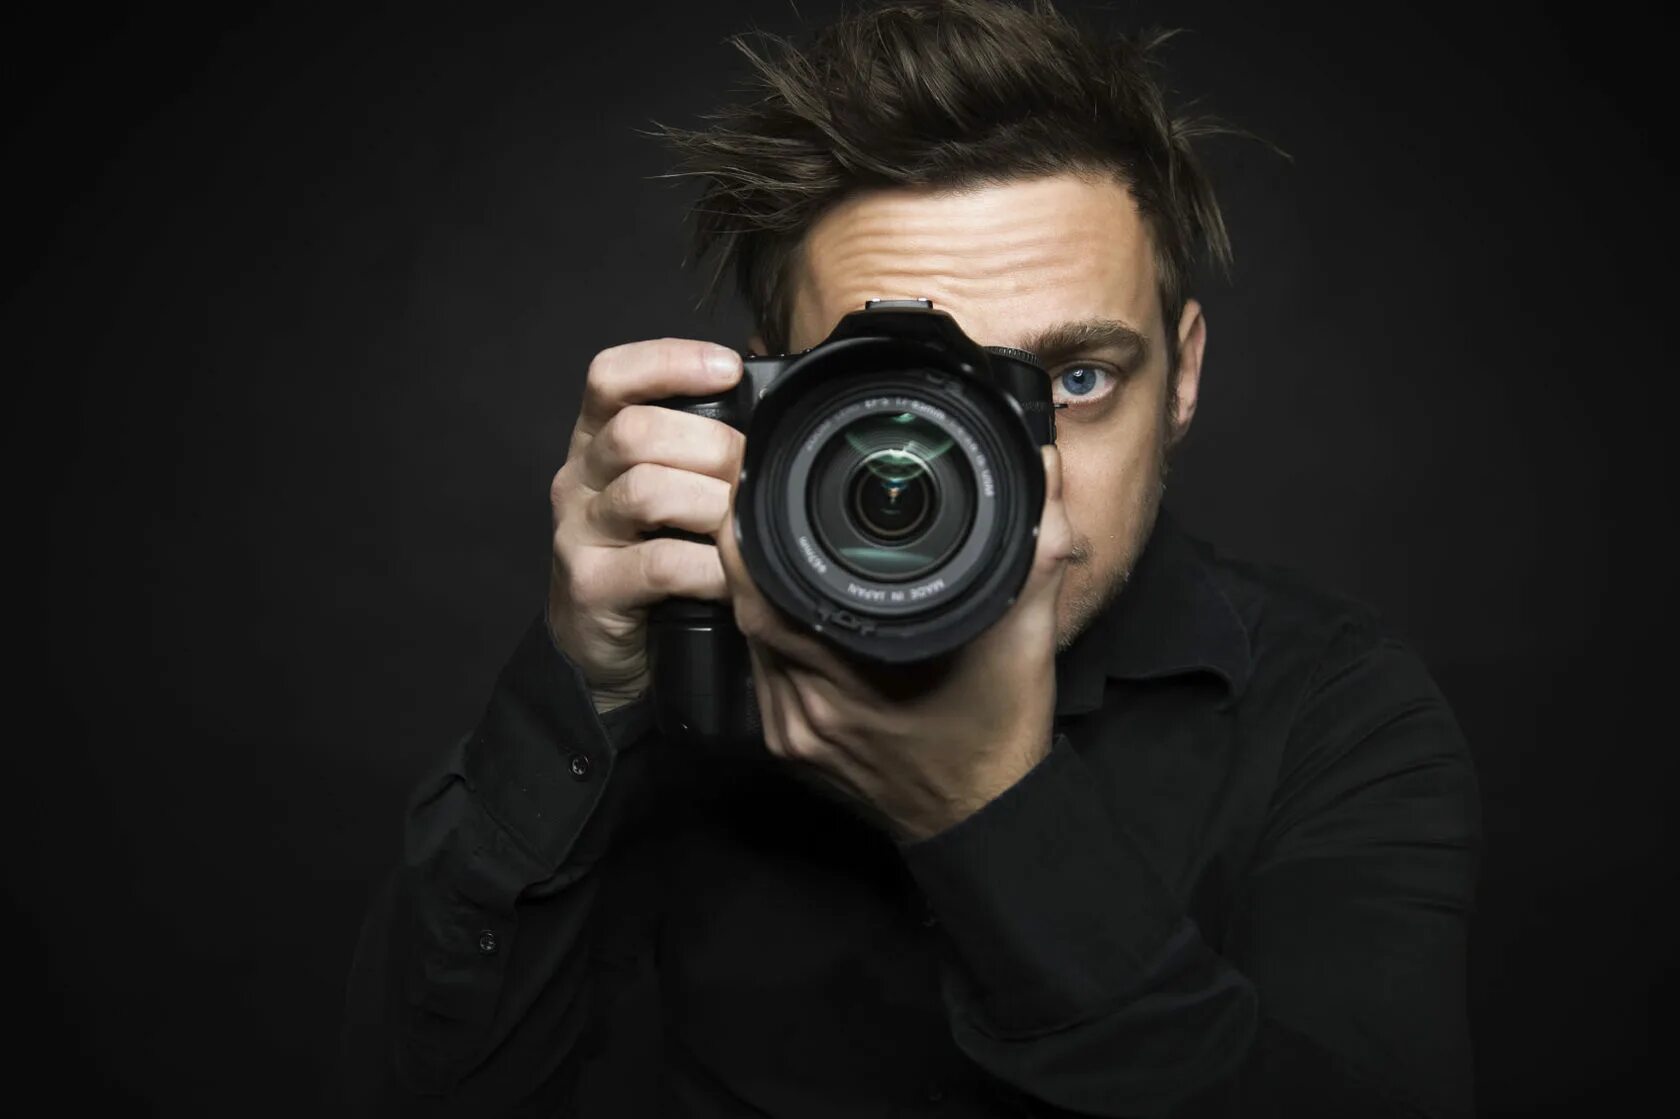 Фотограф. Человек с фотоаппаратом. Мужчина с фотоаппаратом. Фотограф с фотоаппаратом. Портрет фотографа.